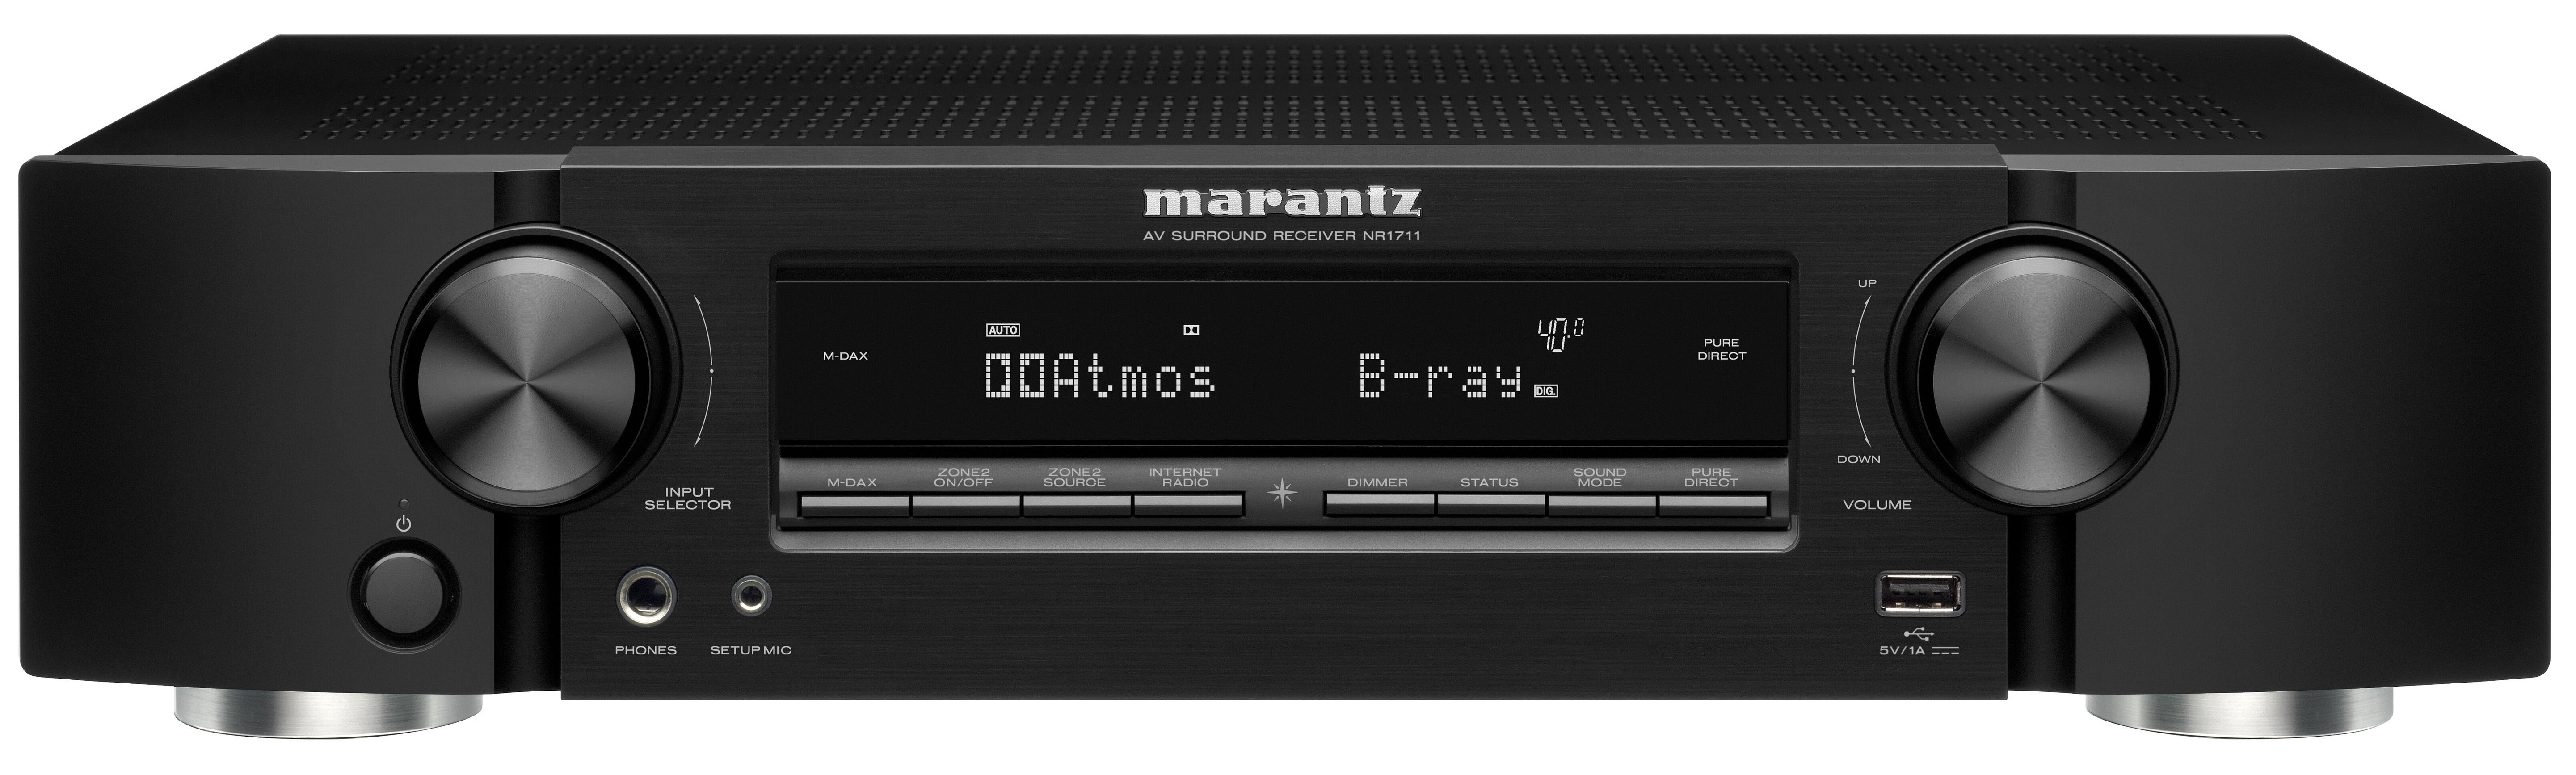 Marantz NR1711 8K 7.2 Channel Ultra HD AV Receiver (2020 Model) - 3D Audio/Video, Multi-Room Streaming, Alexa Compatible - Black